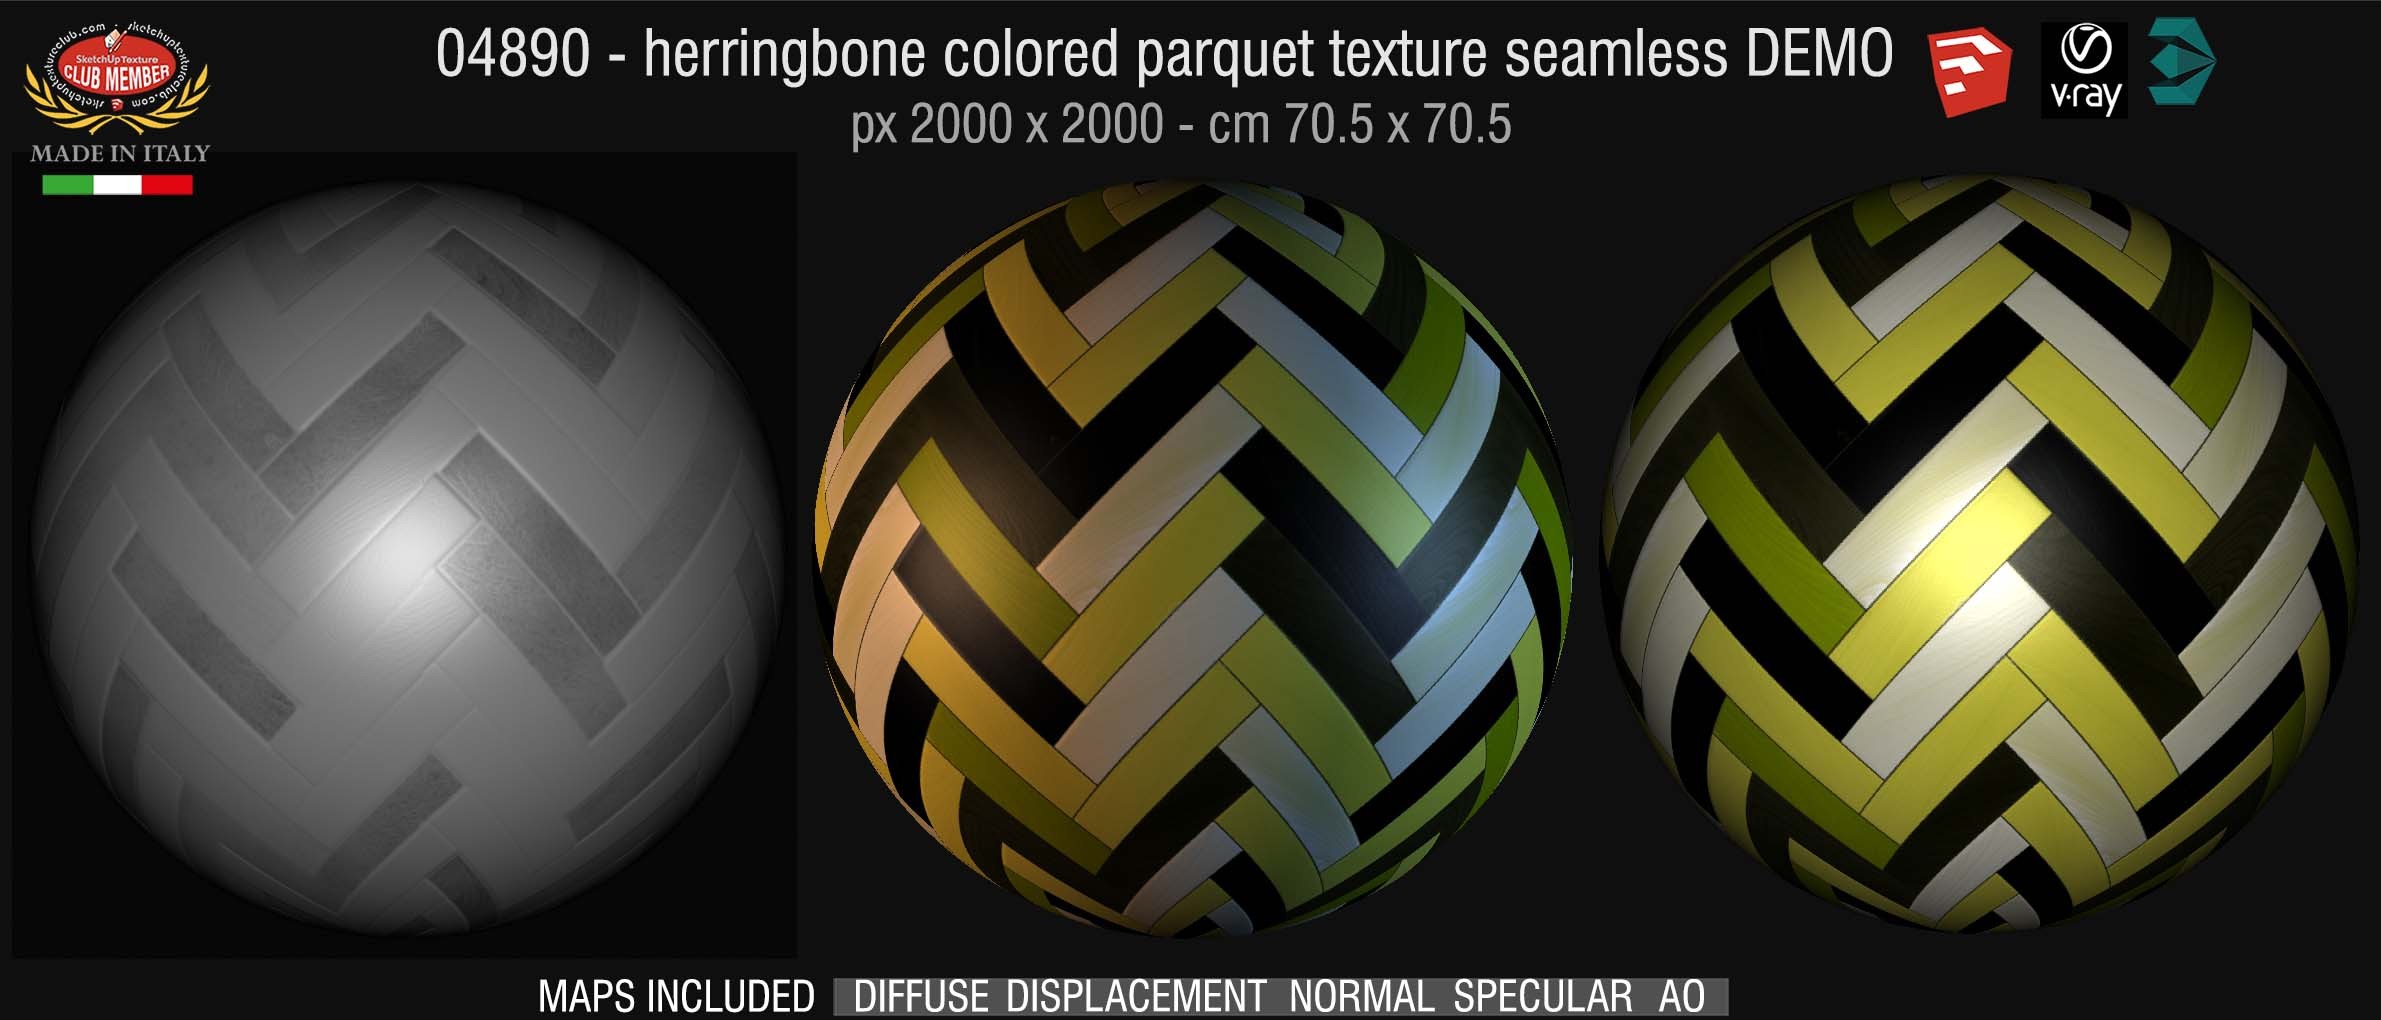 04890 HR Herringbone colored parquet texture seamless + maps DEMO